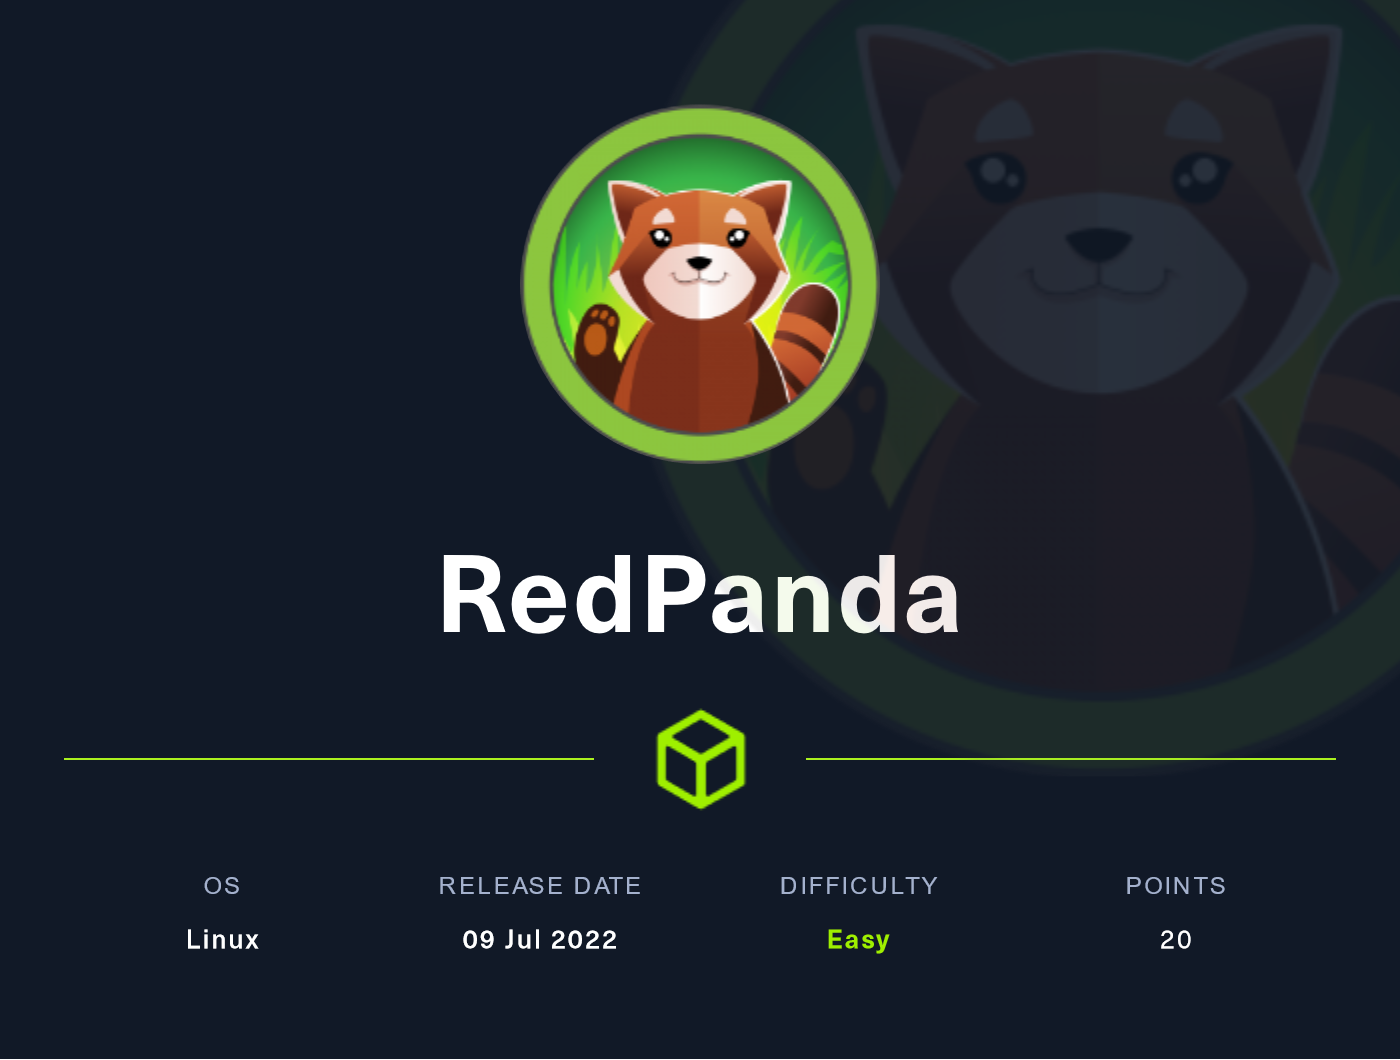 RedPanda info card